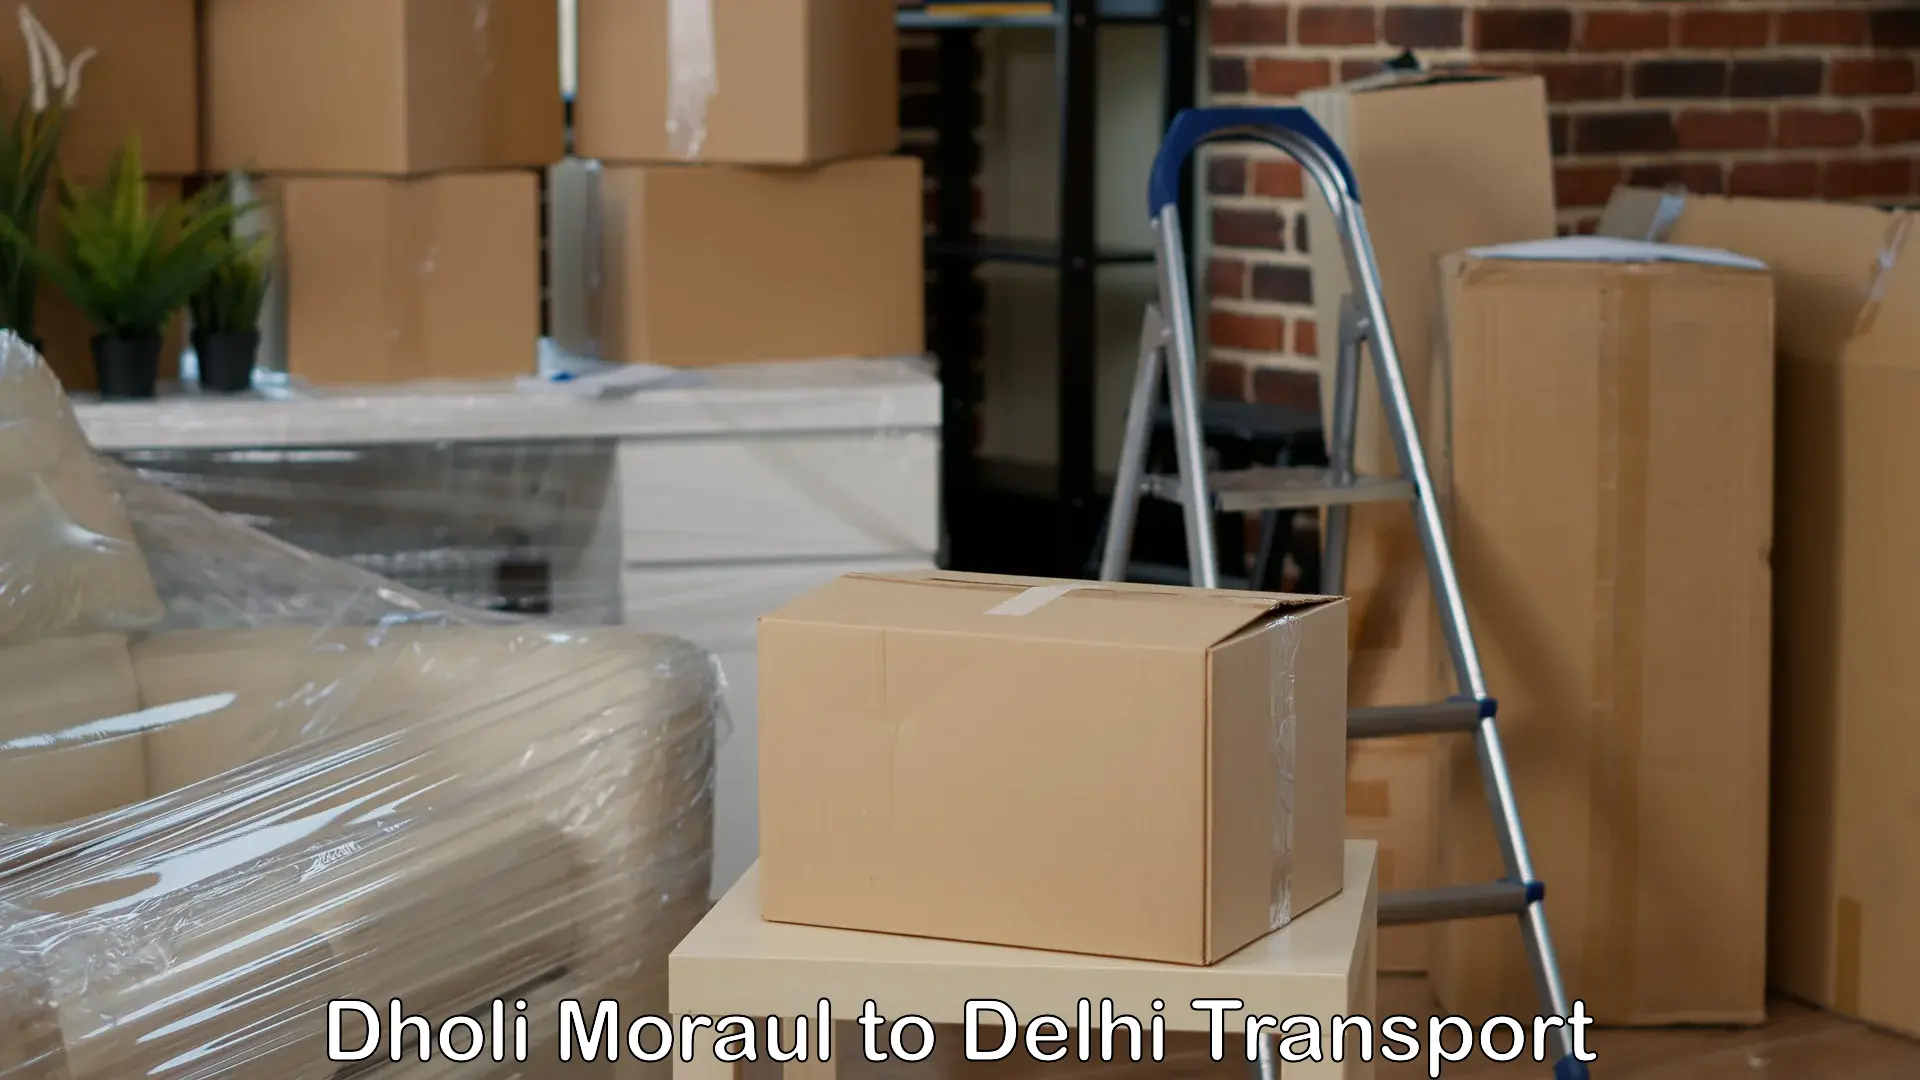 Goods delivery service Dholi Moraul to Delhi